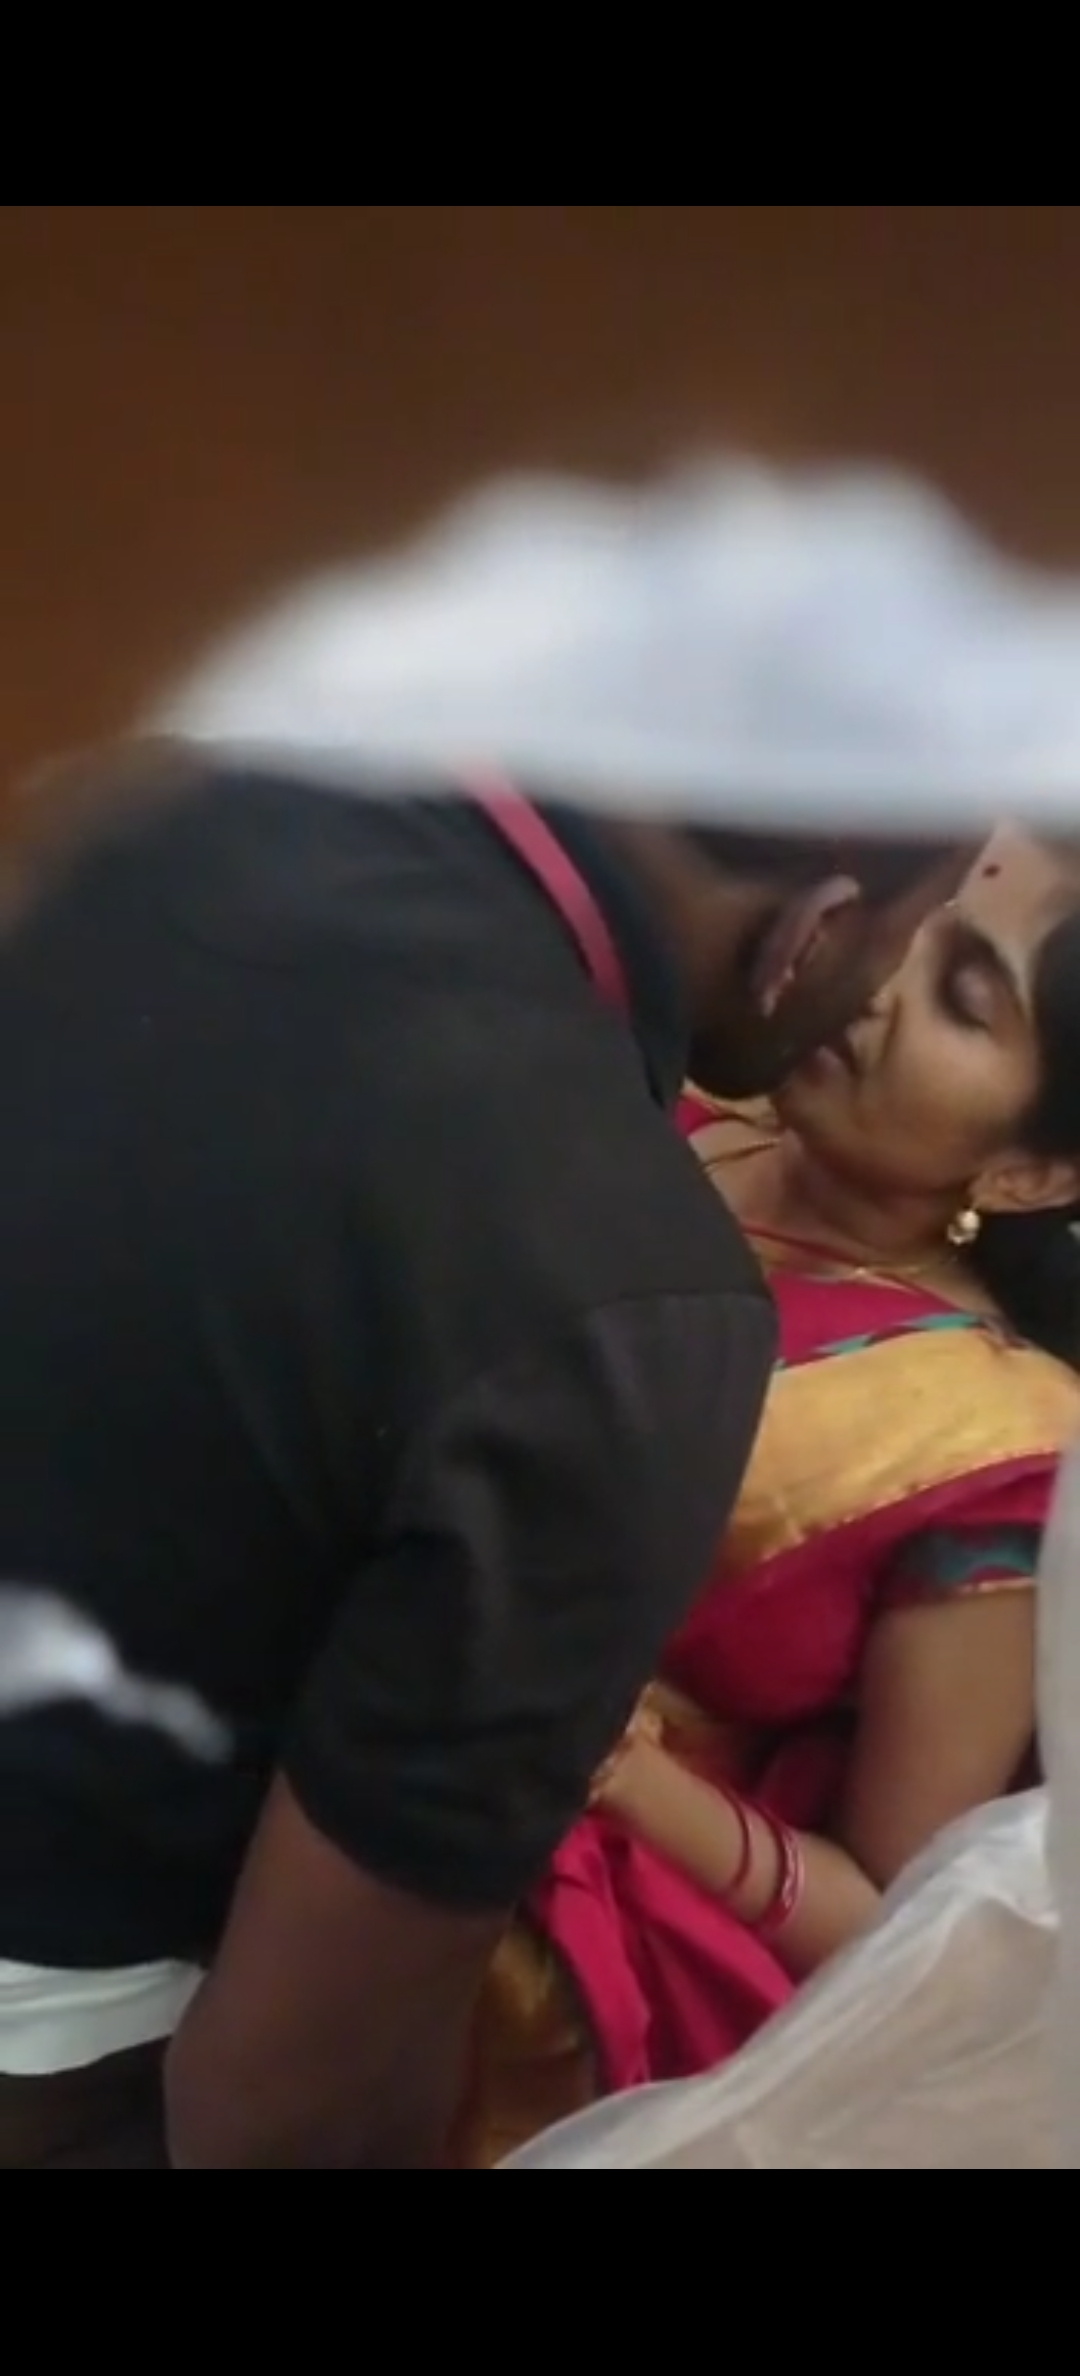 Tamil lovers xnxx videos